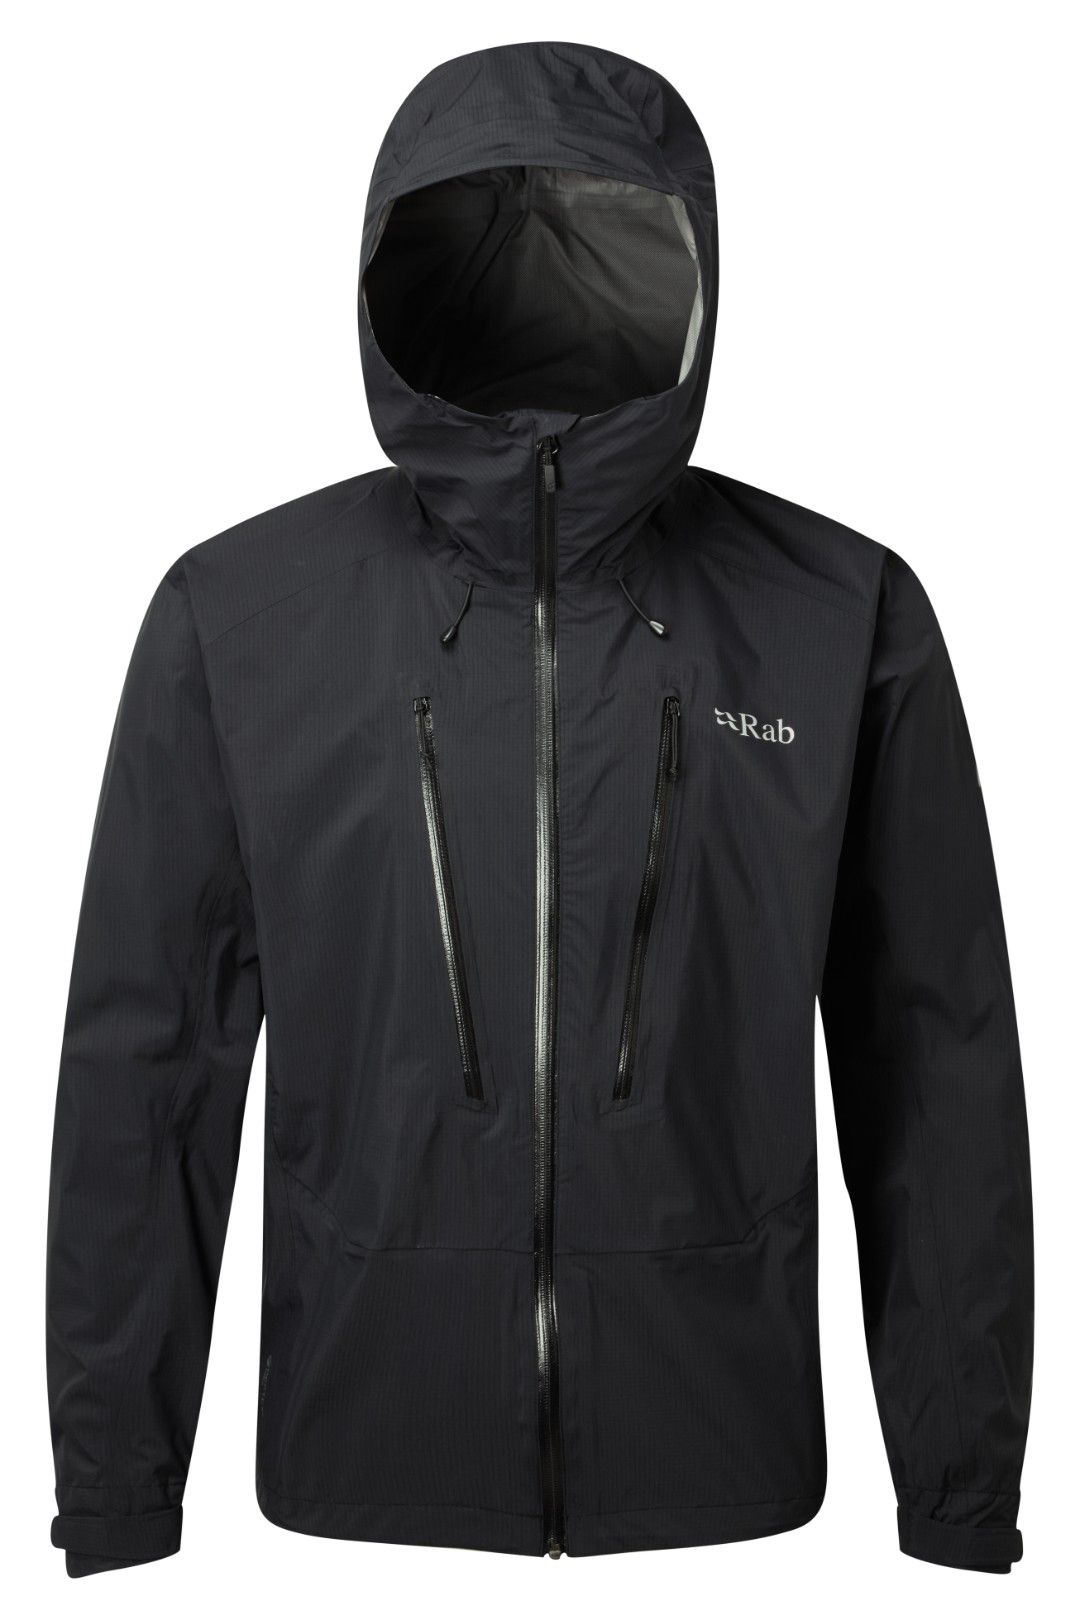 Rab Downpour Alpine Jacket - Hardshell jacket - Men's